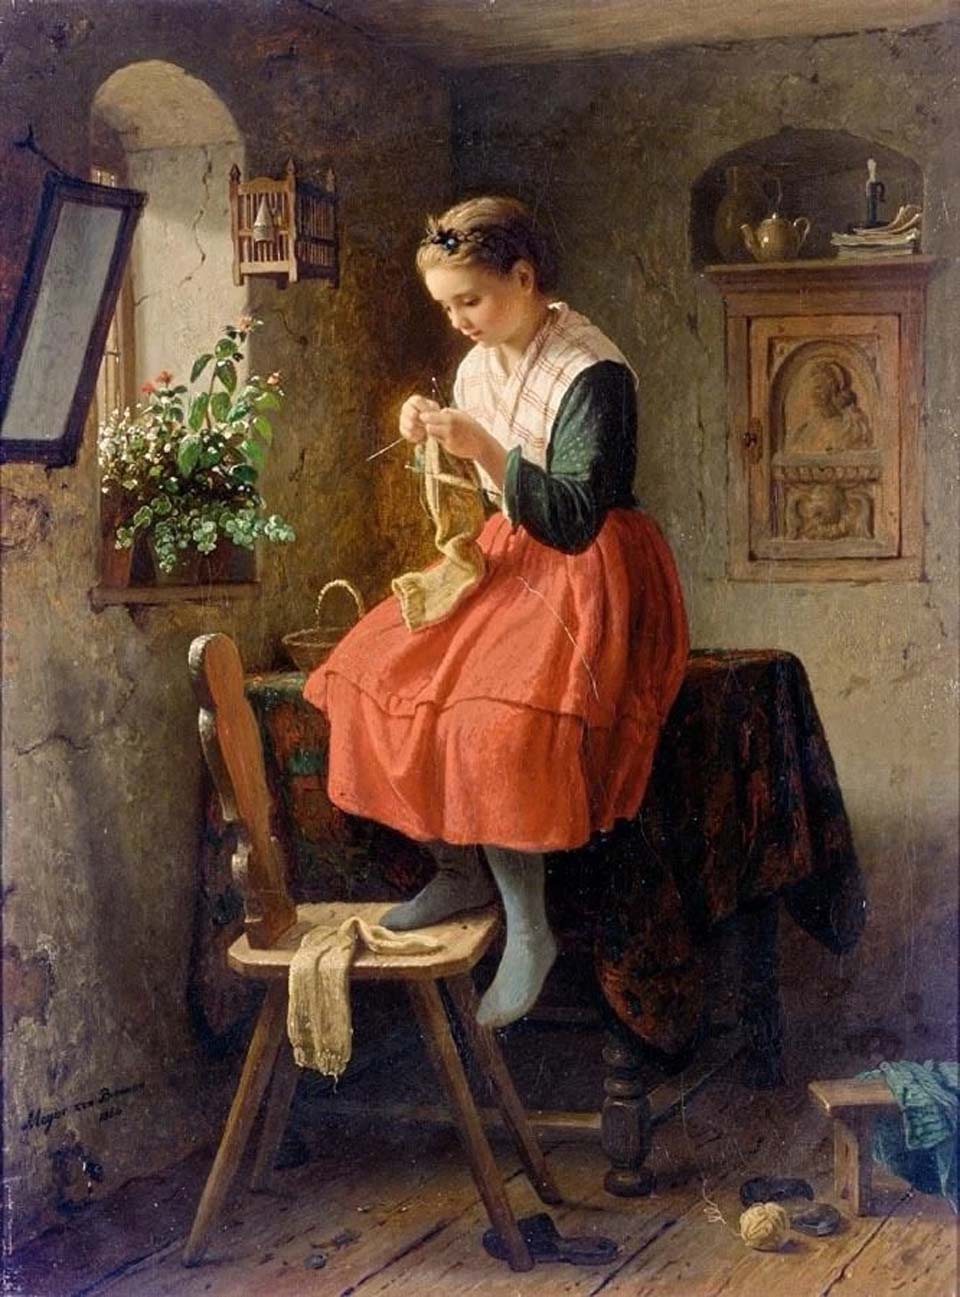 Girl knitting by a window